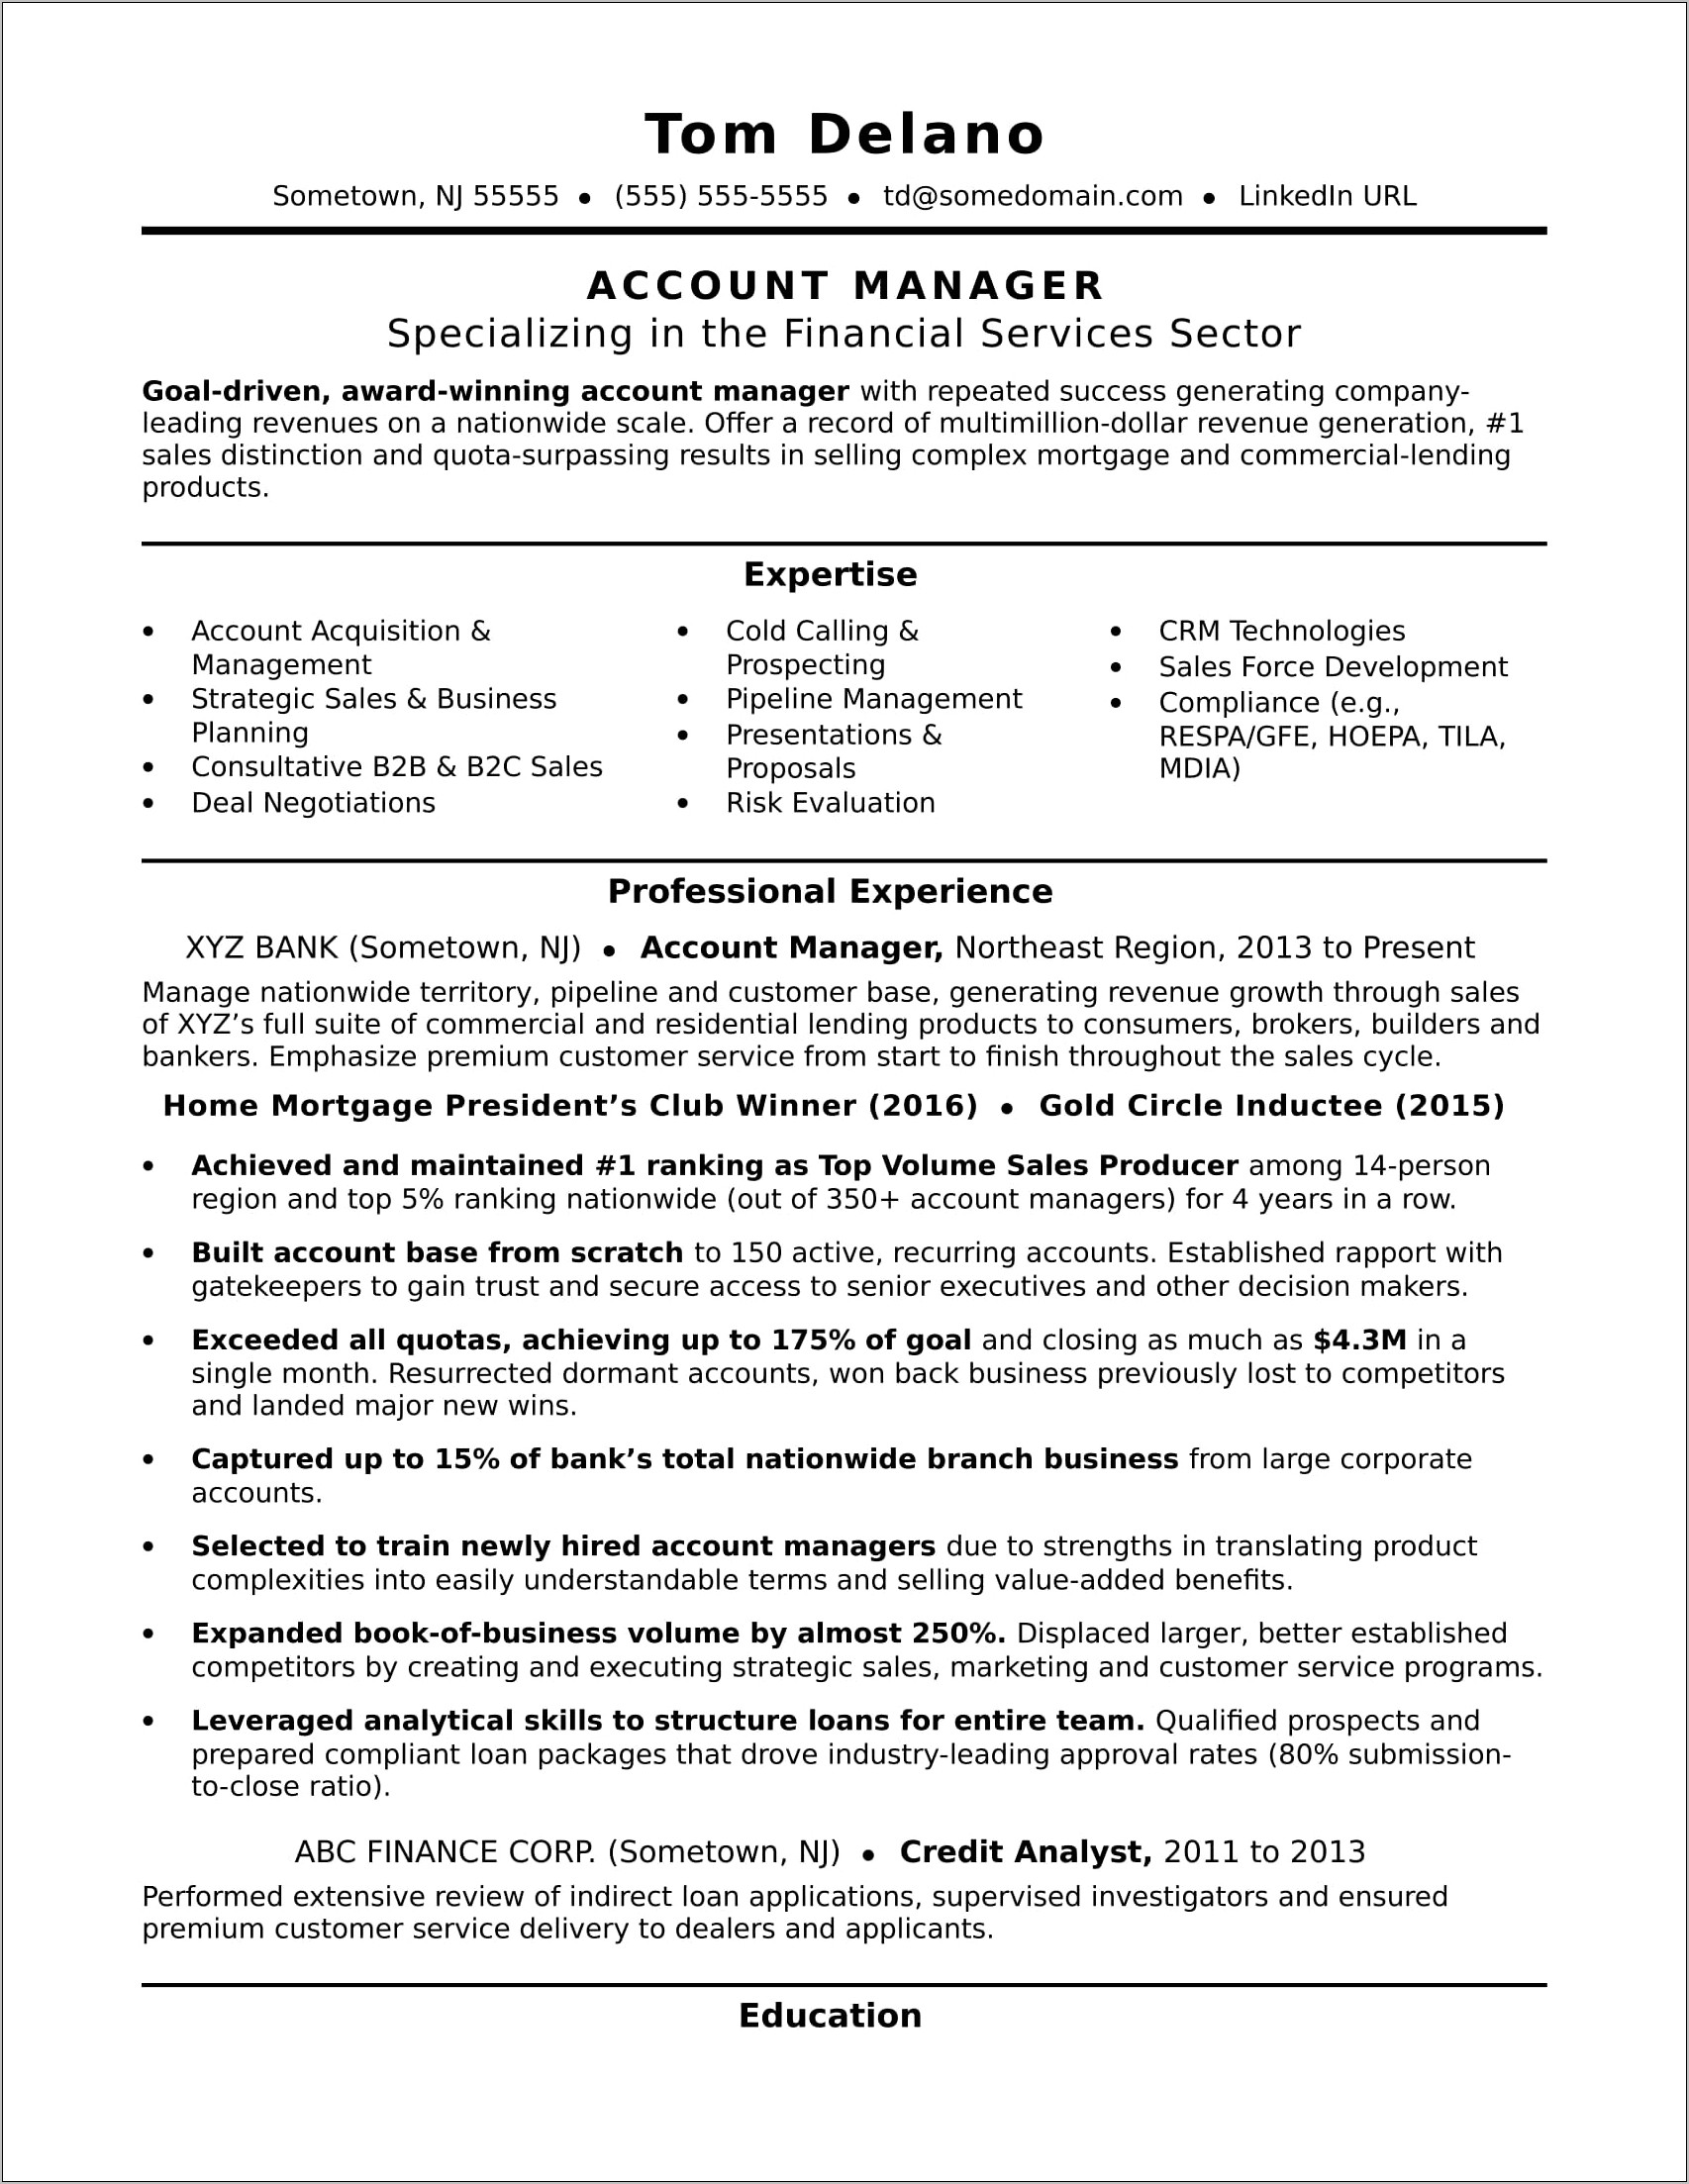 Account Manager Job Description On Resume